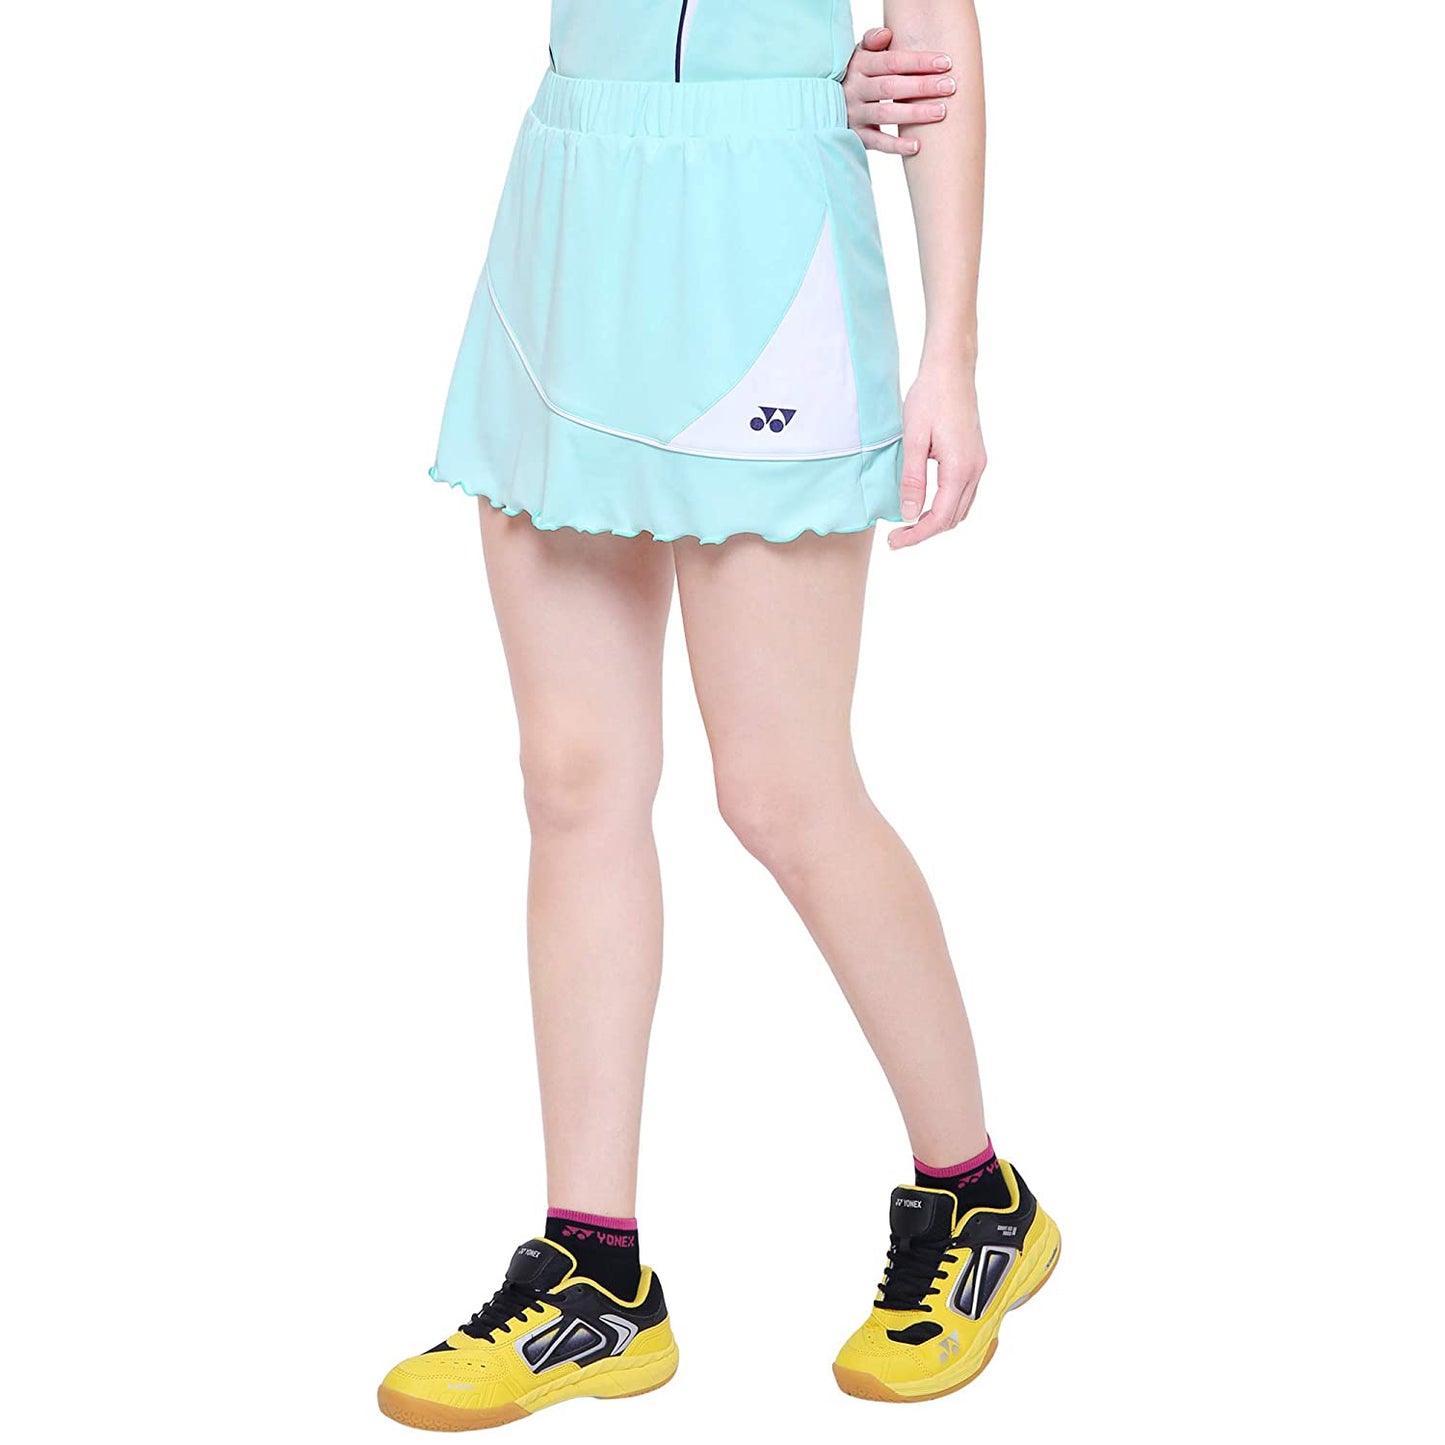 Yonex 1133 Skirt for Women, Cabbage - Best Price online Prokicksports.com